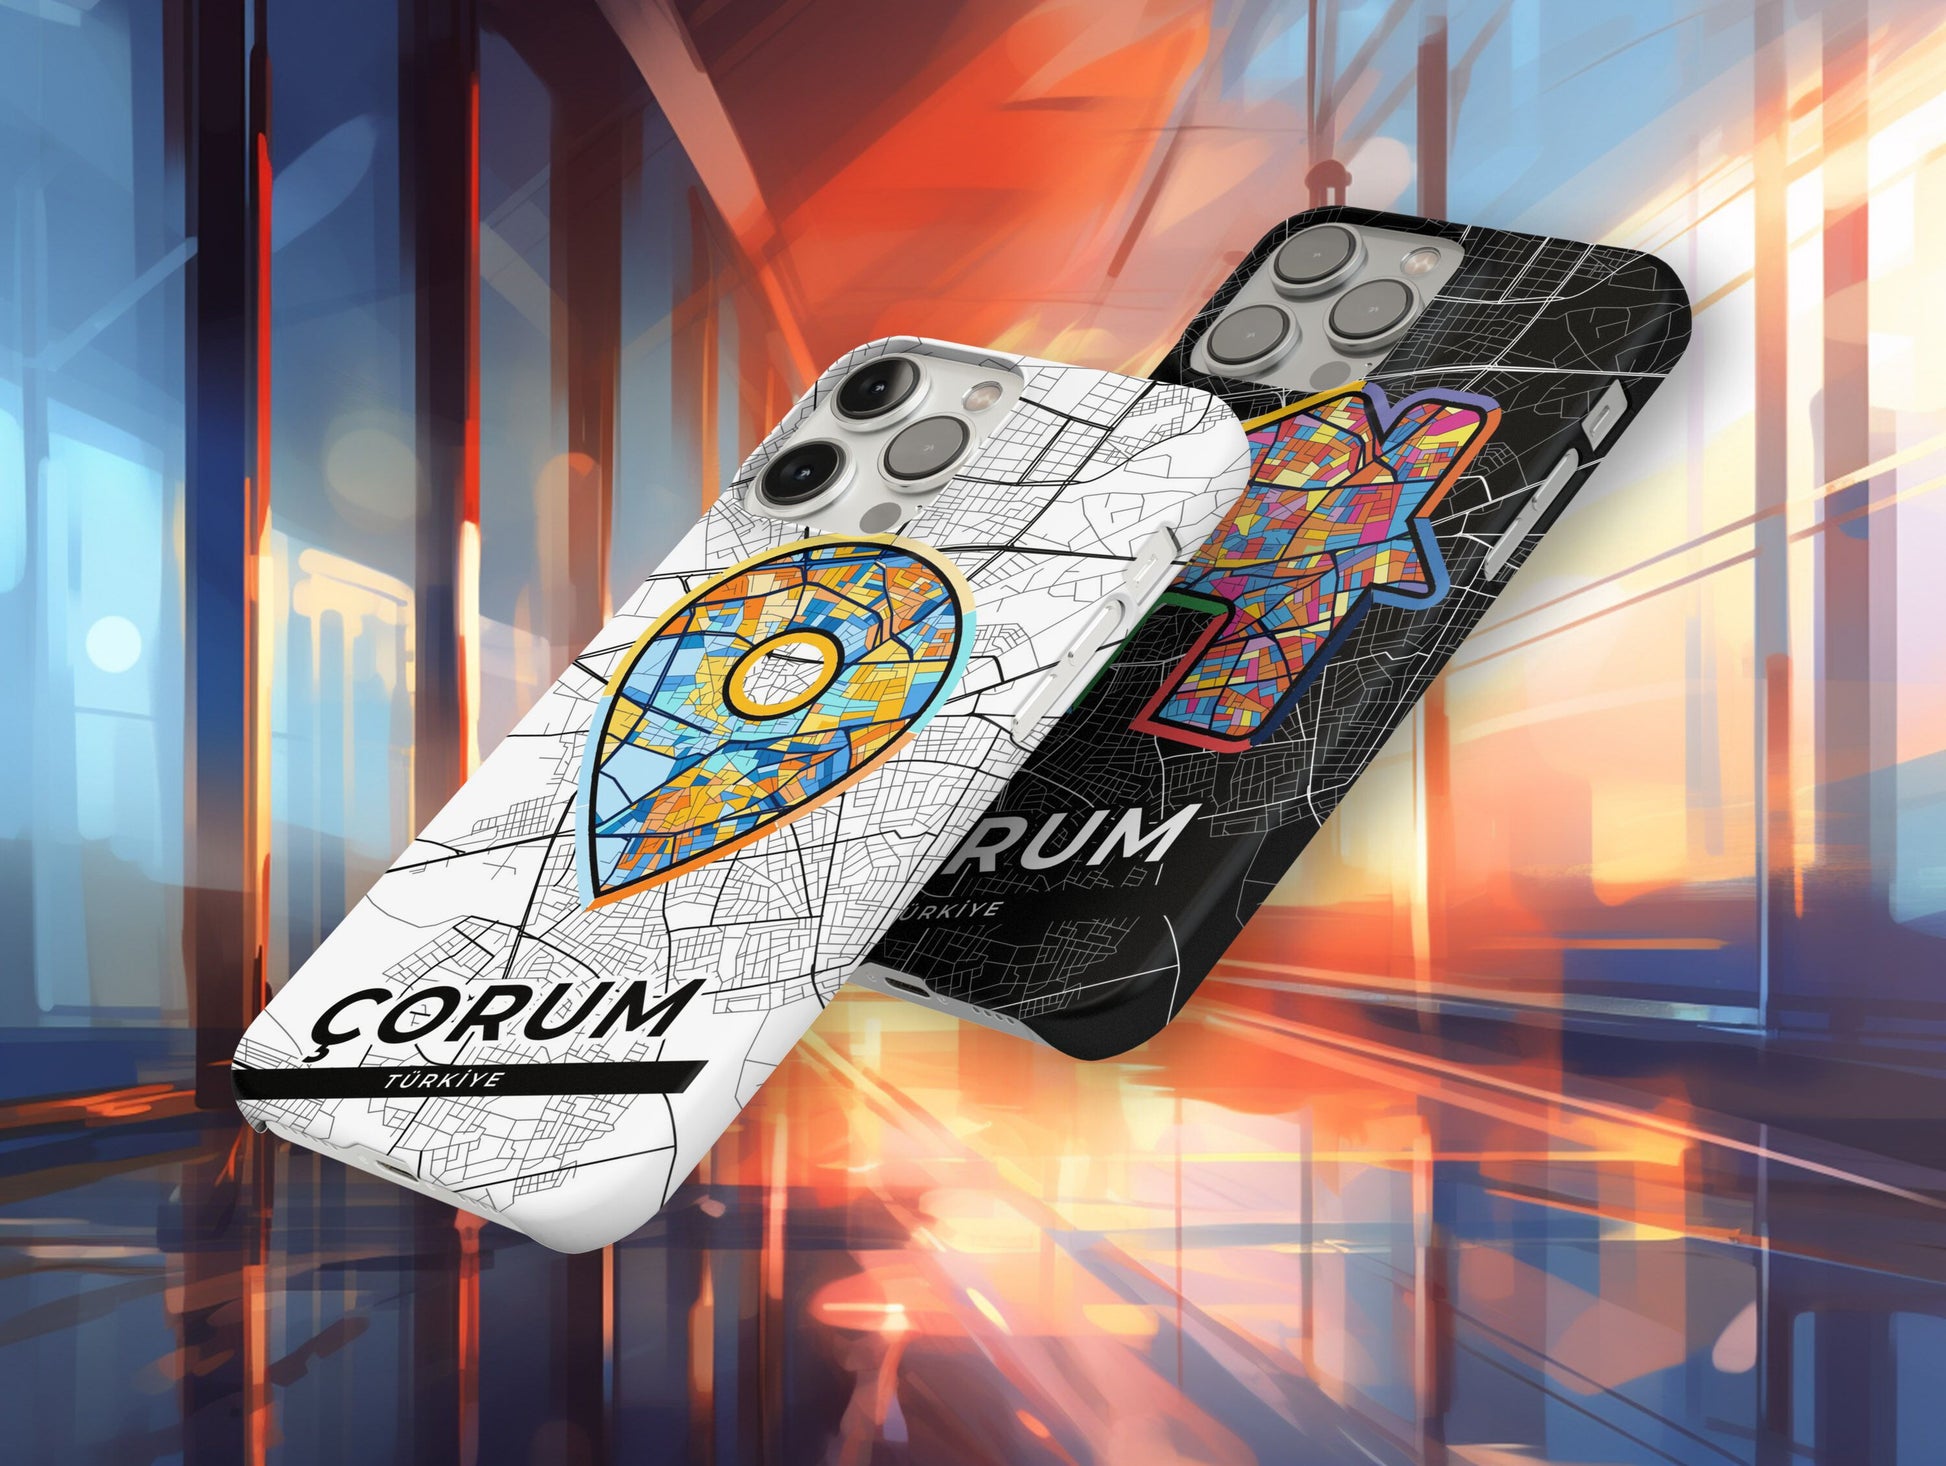 Çorum Turkey slim phone case with colorful icon. Birthday, wedding or housewarming gift. Couple match cases.